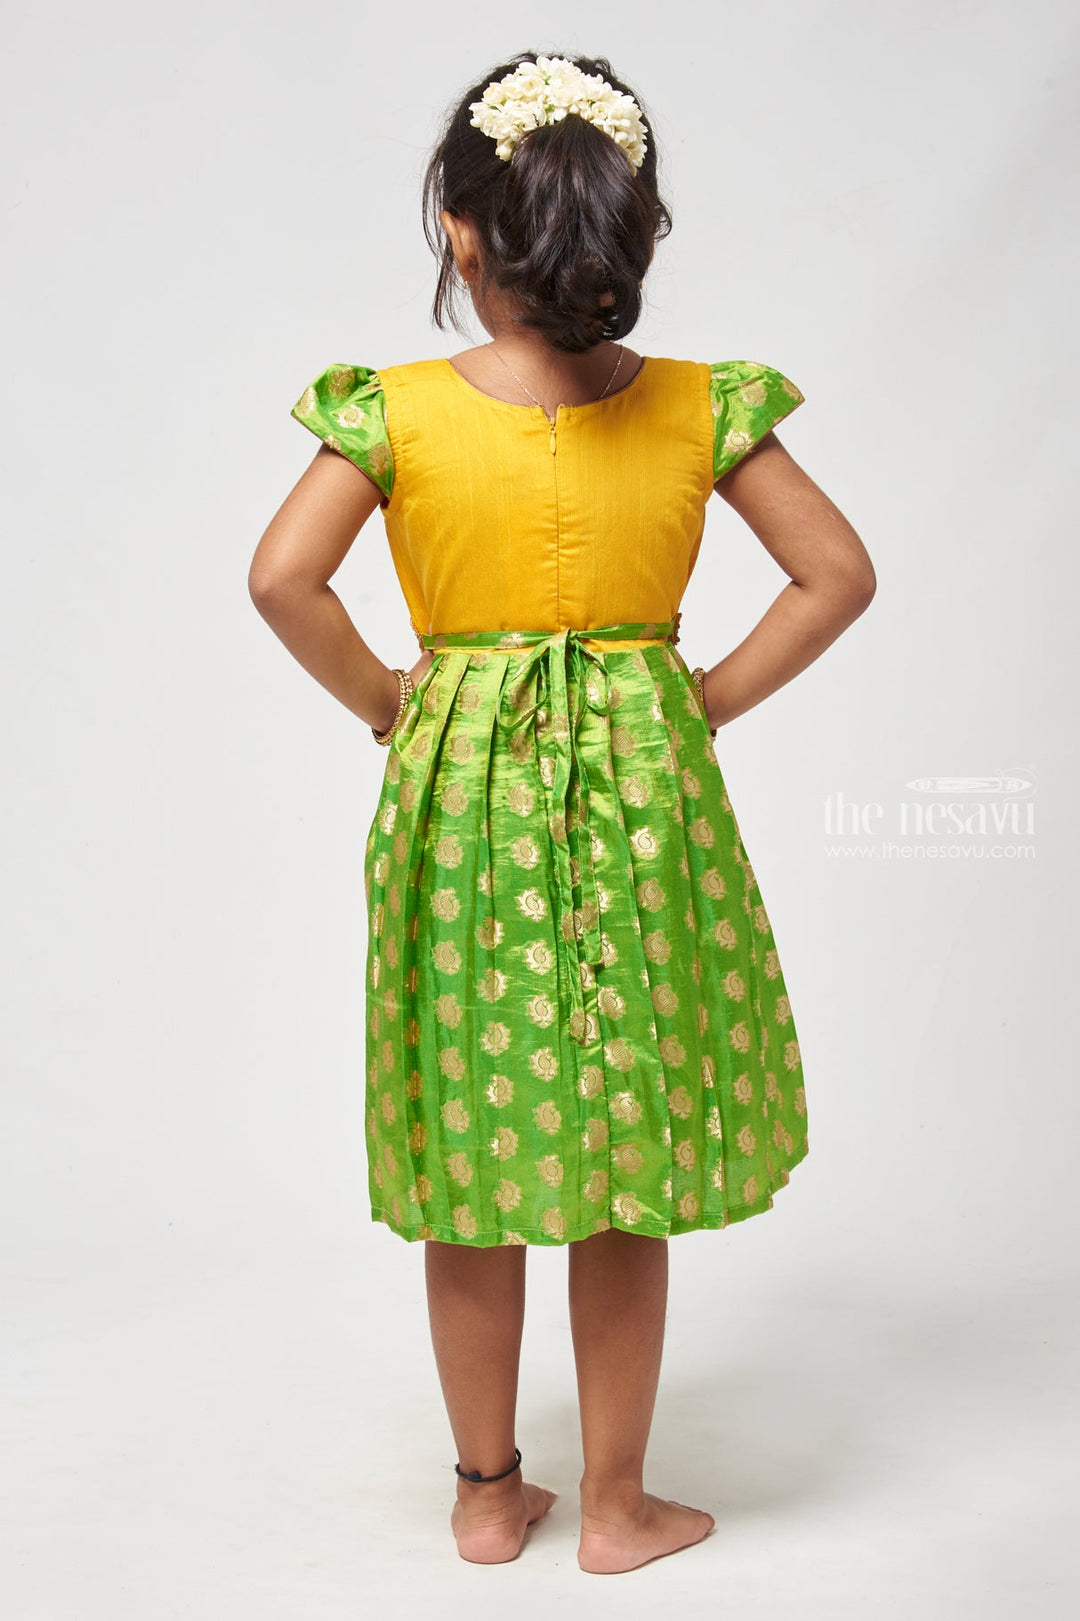 The Nesavu Silk Frock Lush Green Butta Dream Pleated Pattu Brilliance for Girls. Nesavu Latest Green Dresigner Silk Frock For Girls | Premium Silk Frock | The Nesavu